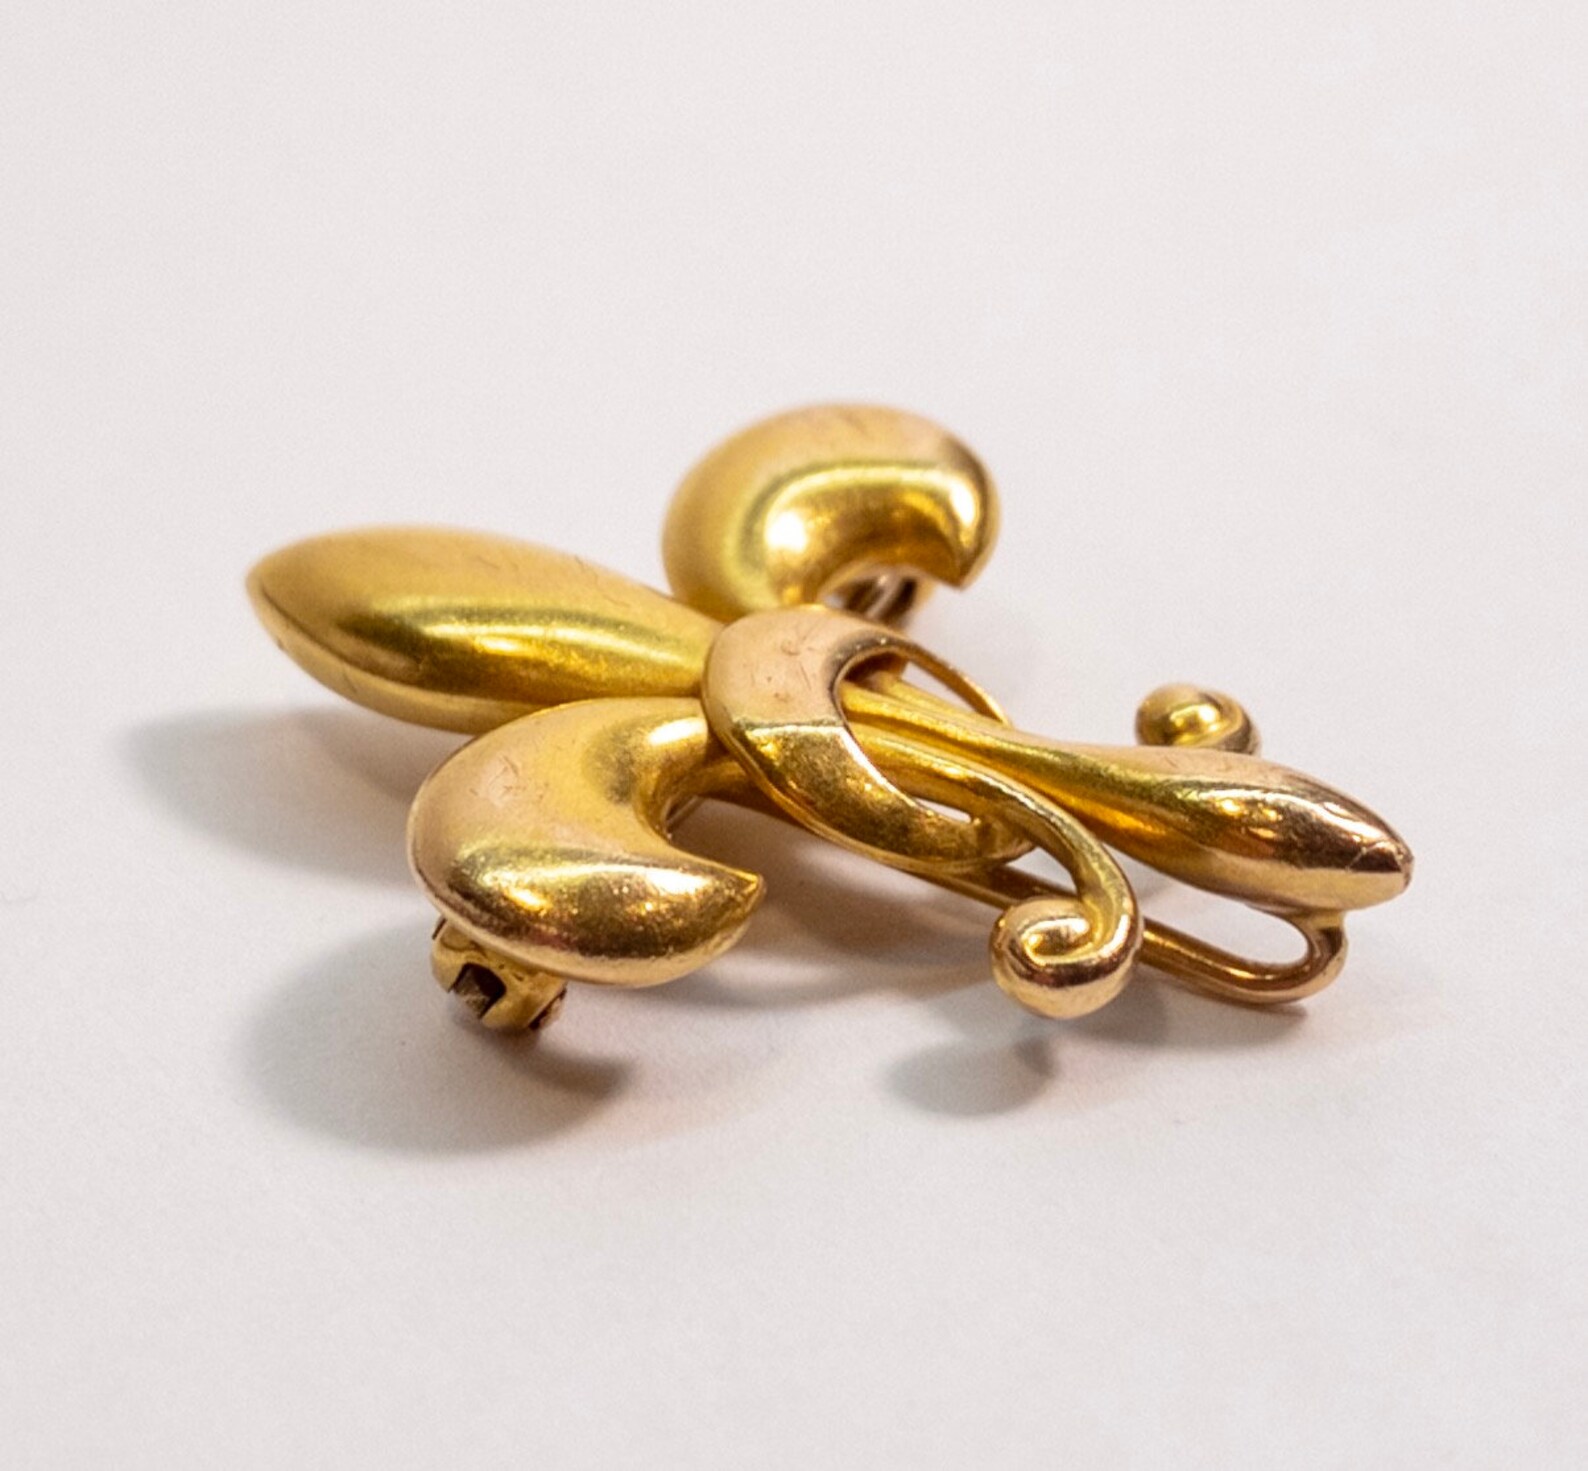 Antique Fleur-de-lis Pin in 18kt Gold - Etsy UK